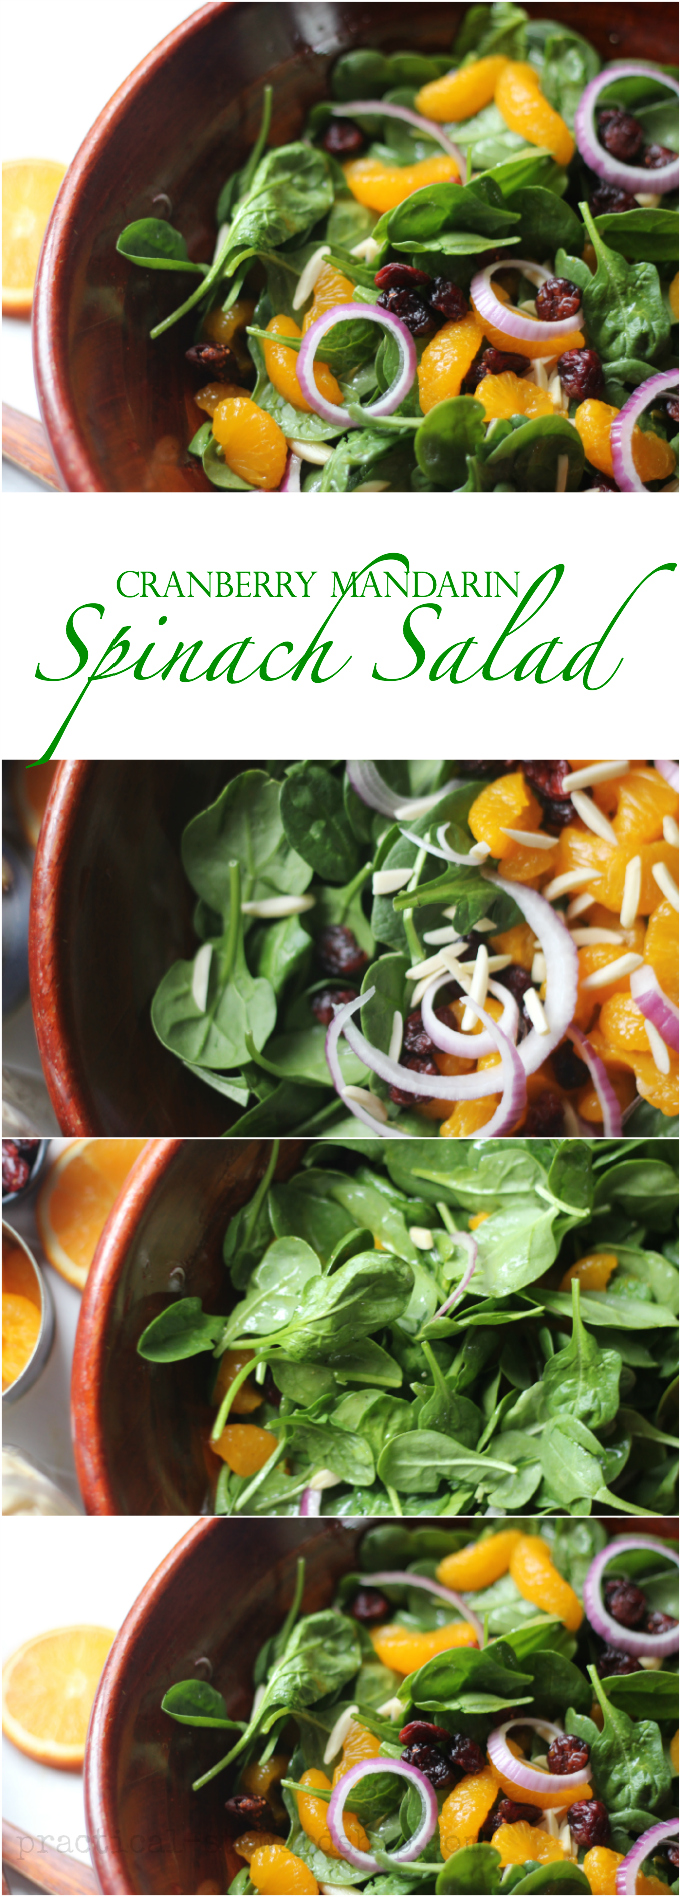 Cranberry Mandarin Spinach Salad Collage